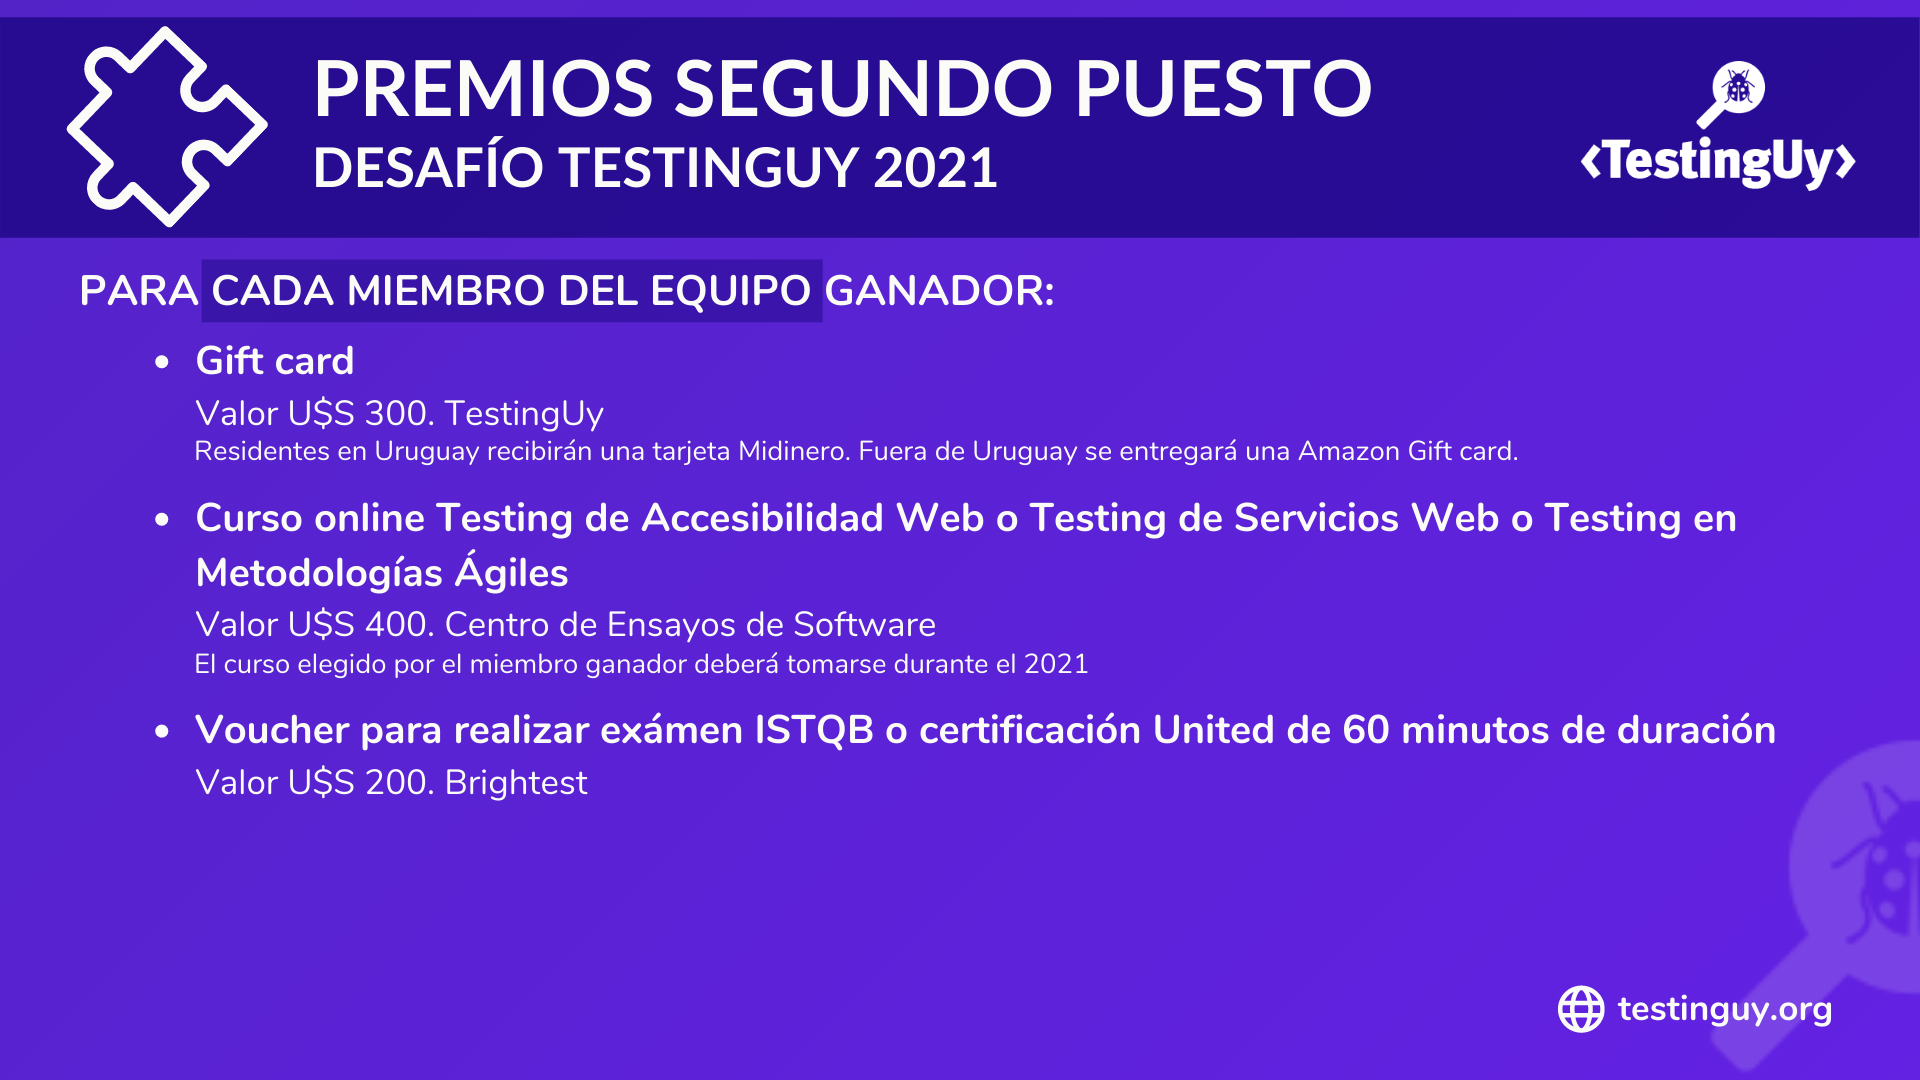 Desafio TestingUy 2021 - Premios Segundo puesto